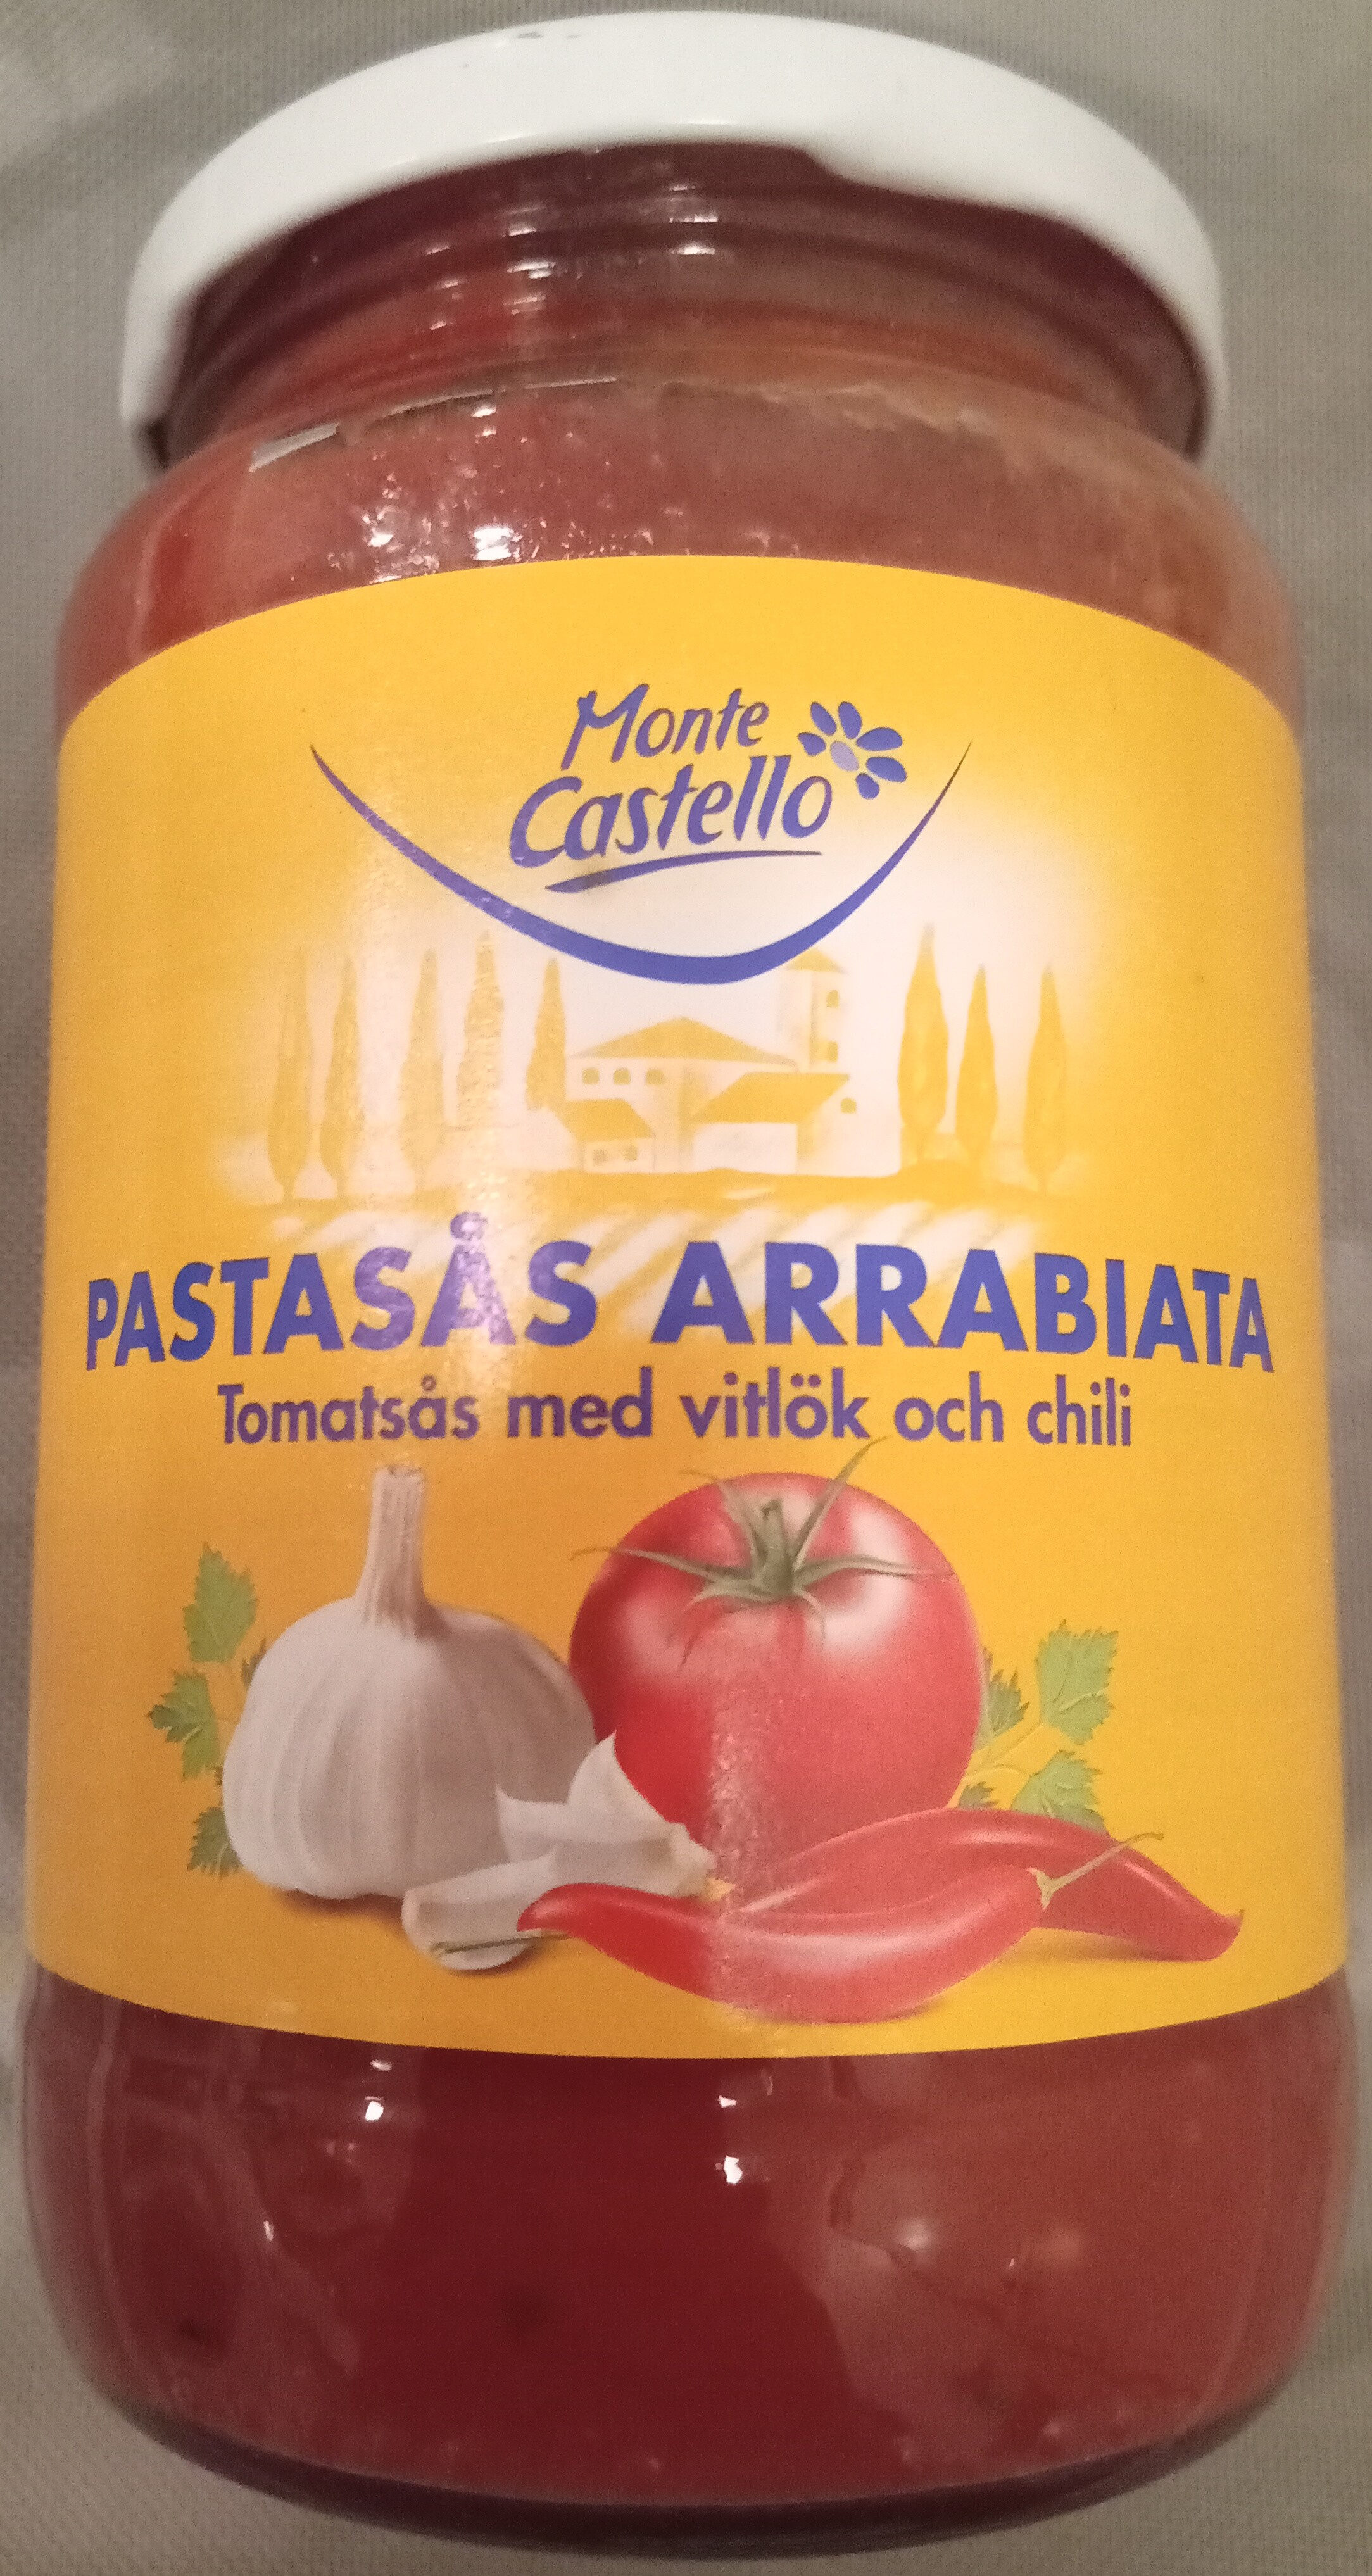 Monte Castello Pastasås Arrabiata - Produkt - sv